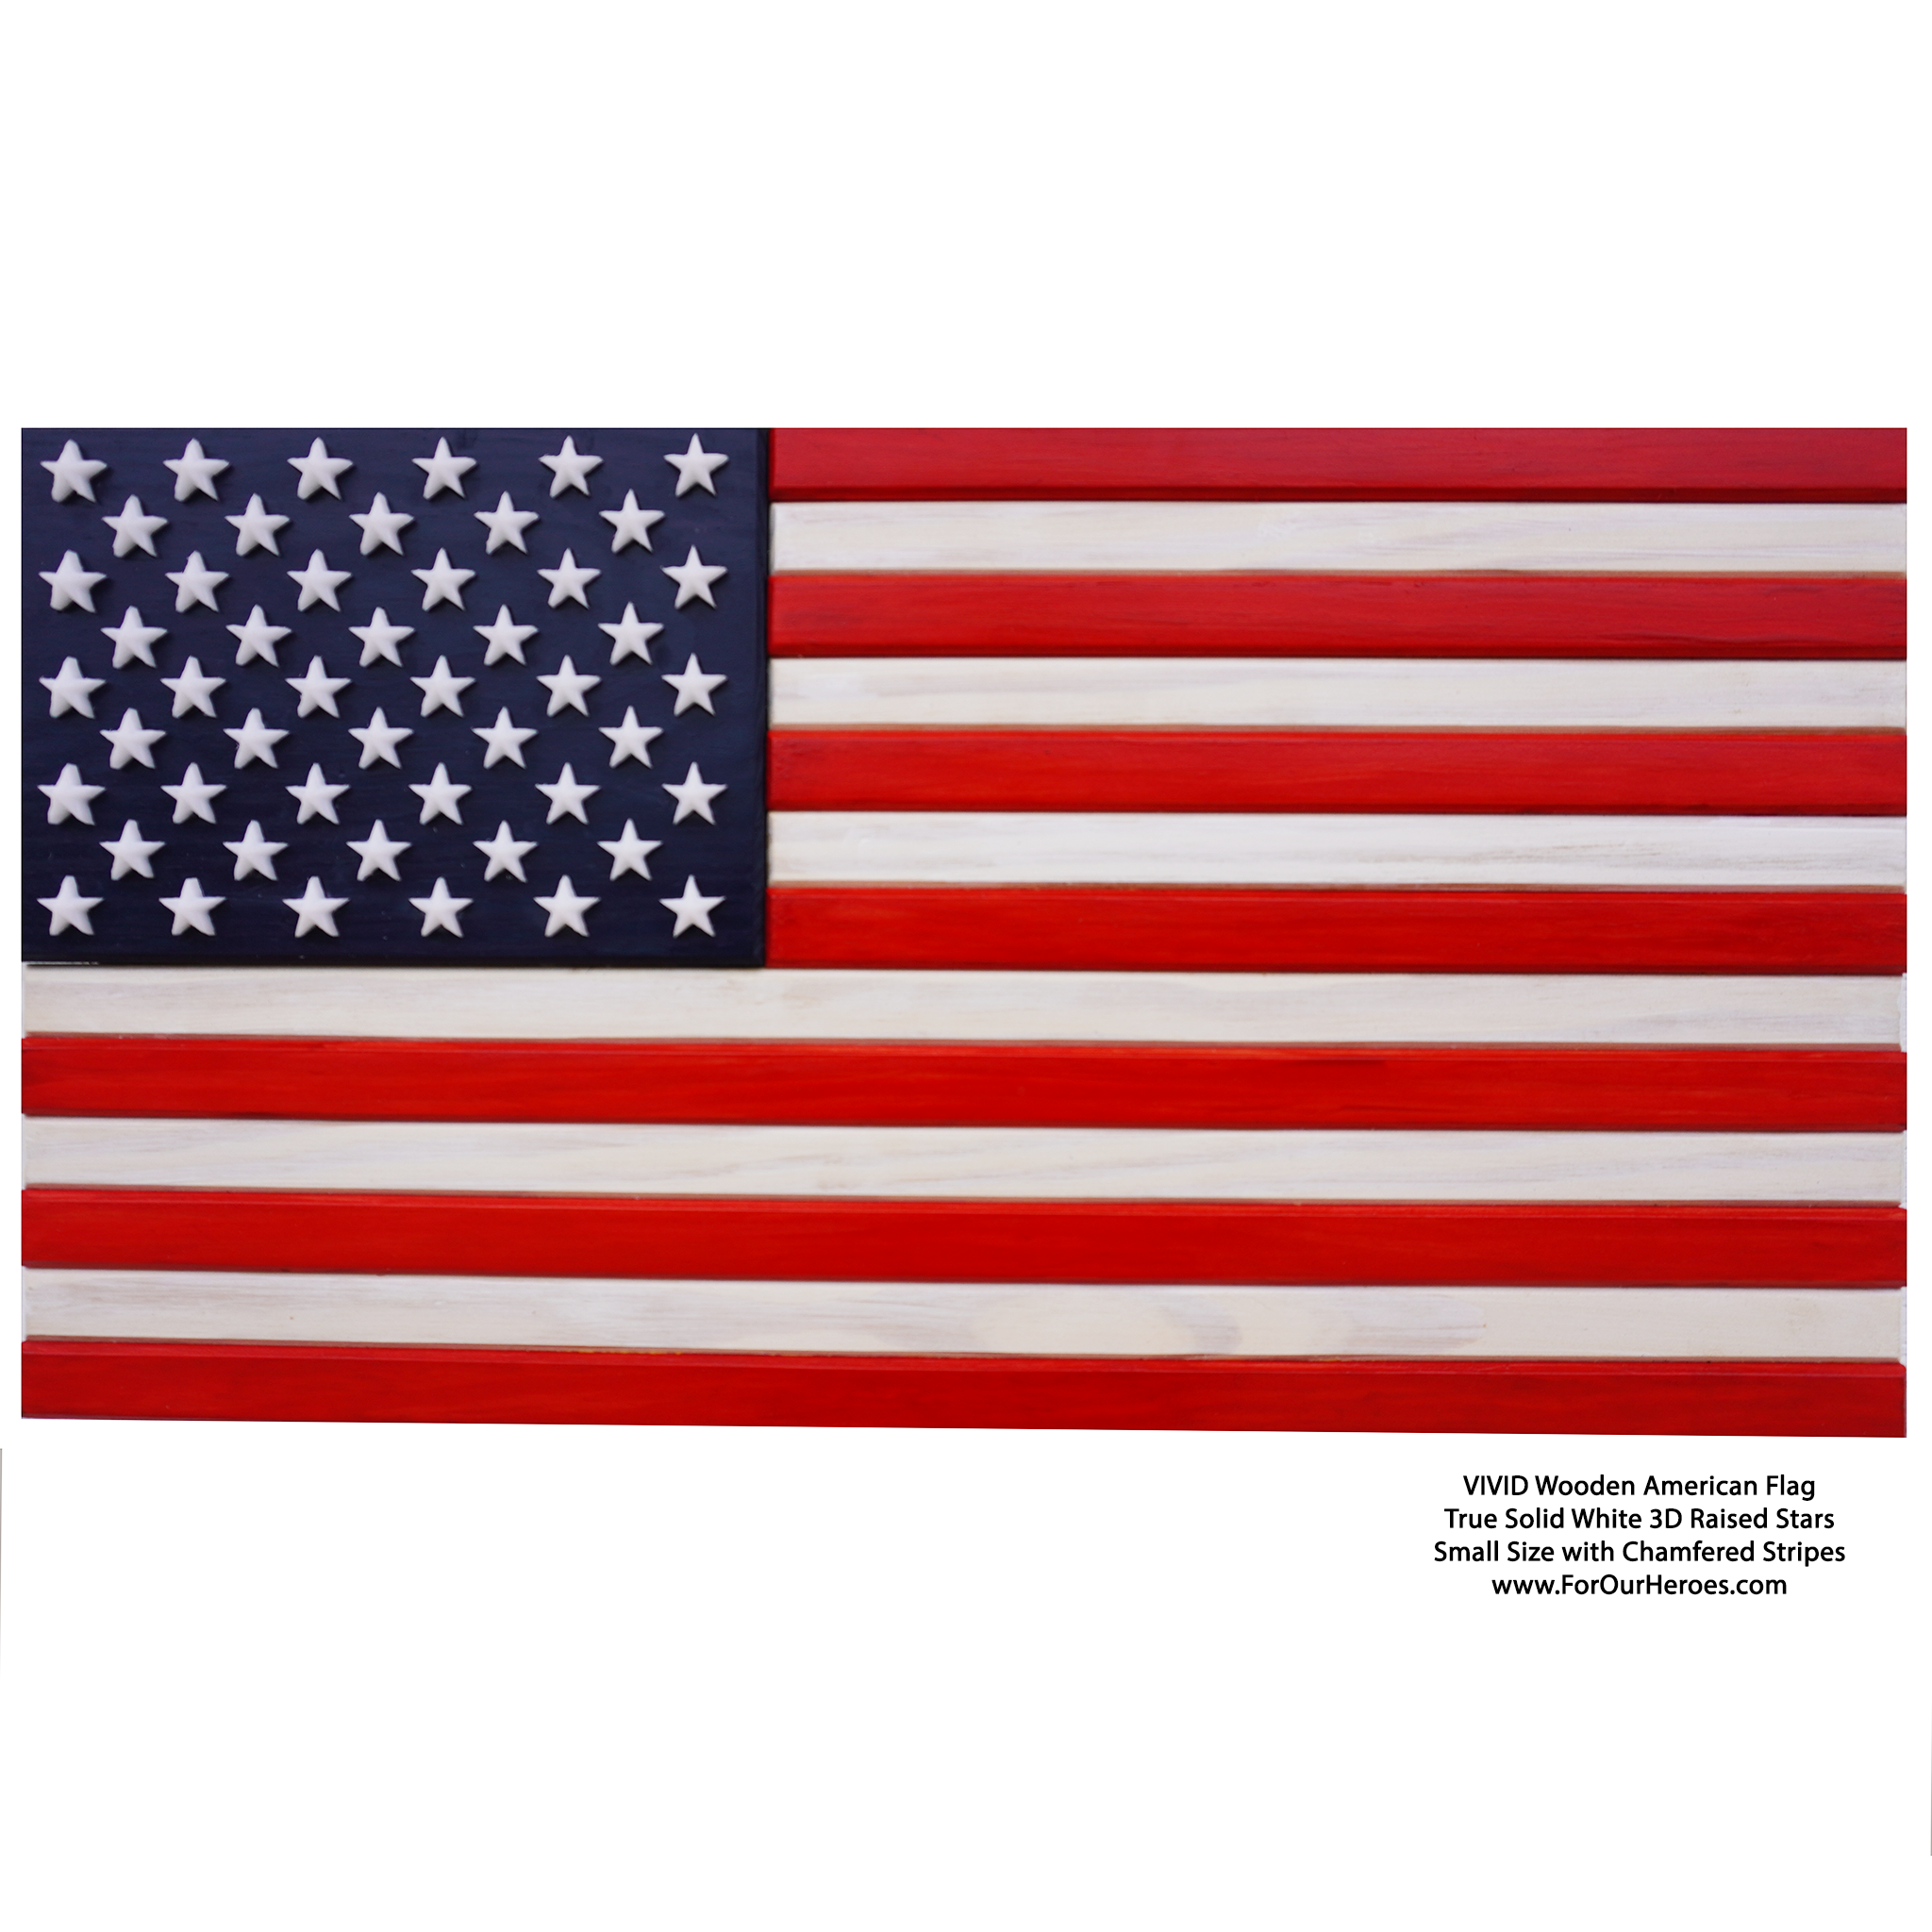 2D VIVID American Flag